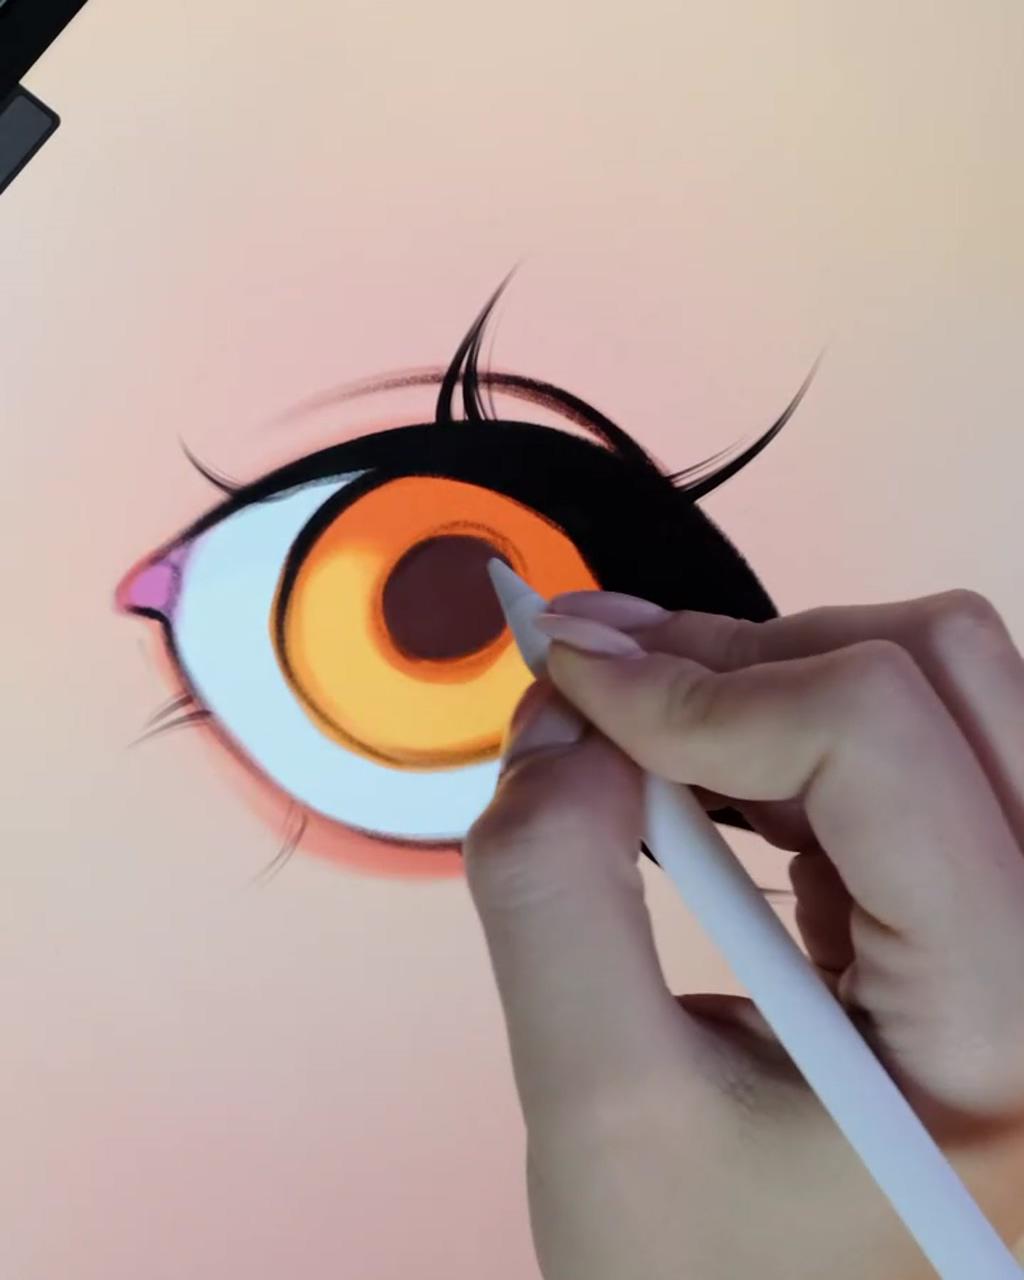 Coloring an eye on procreate by alicja nai; eye sketching tutorial by alicja nai on procreate